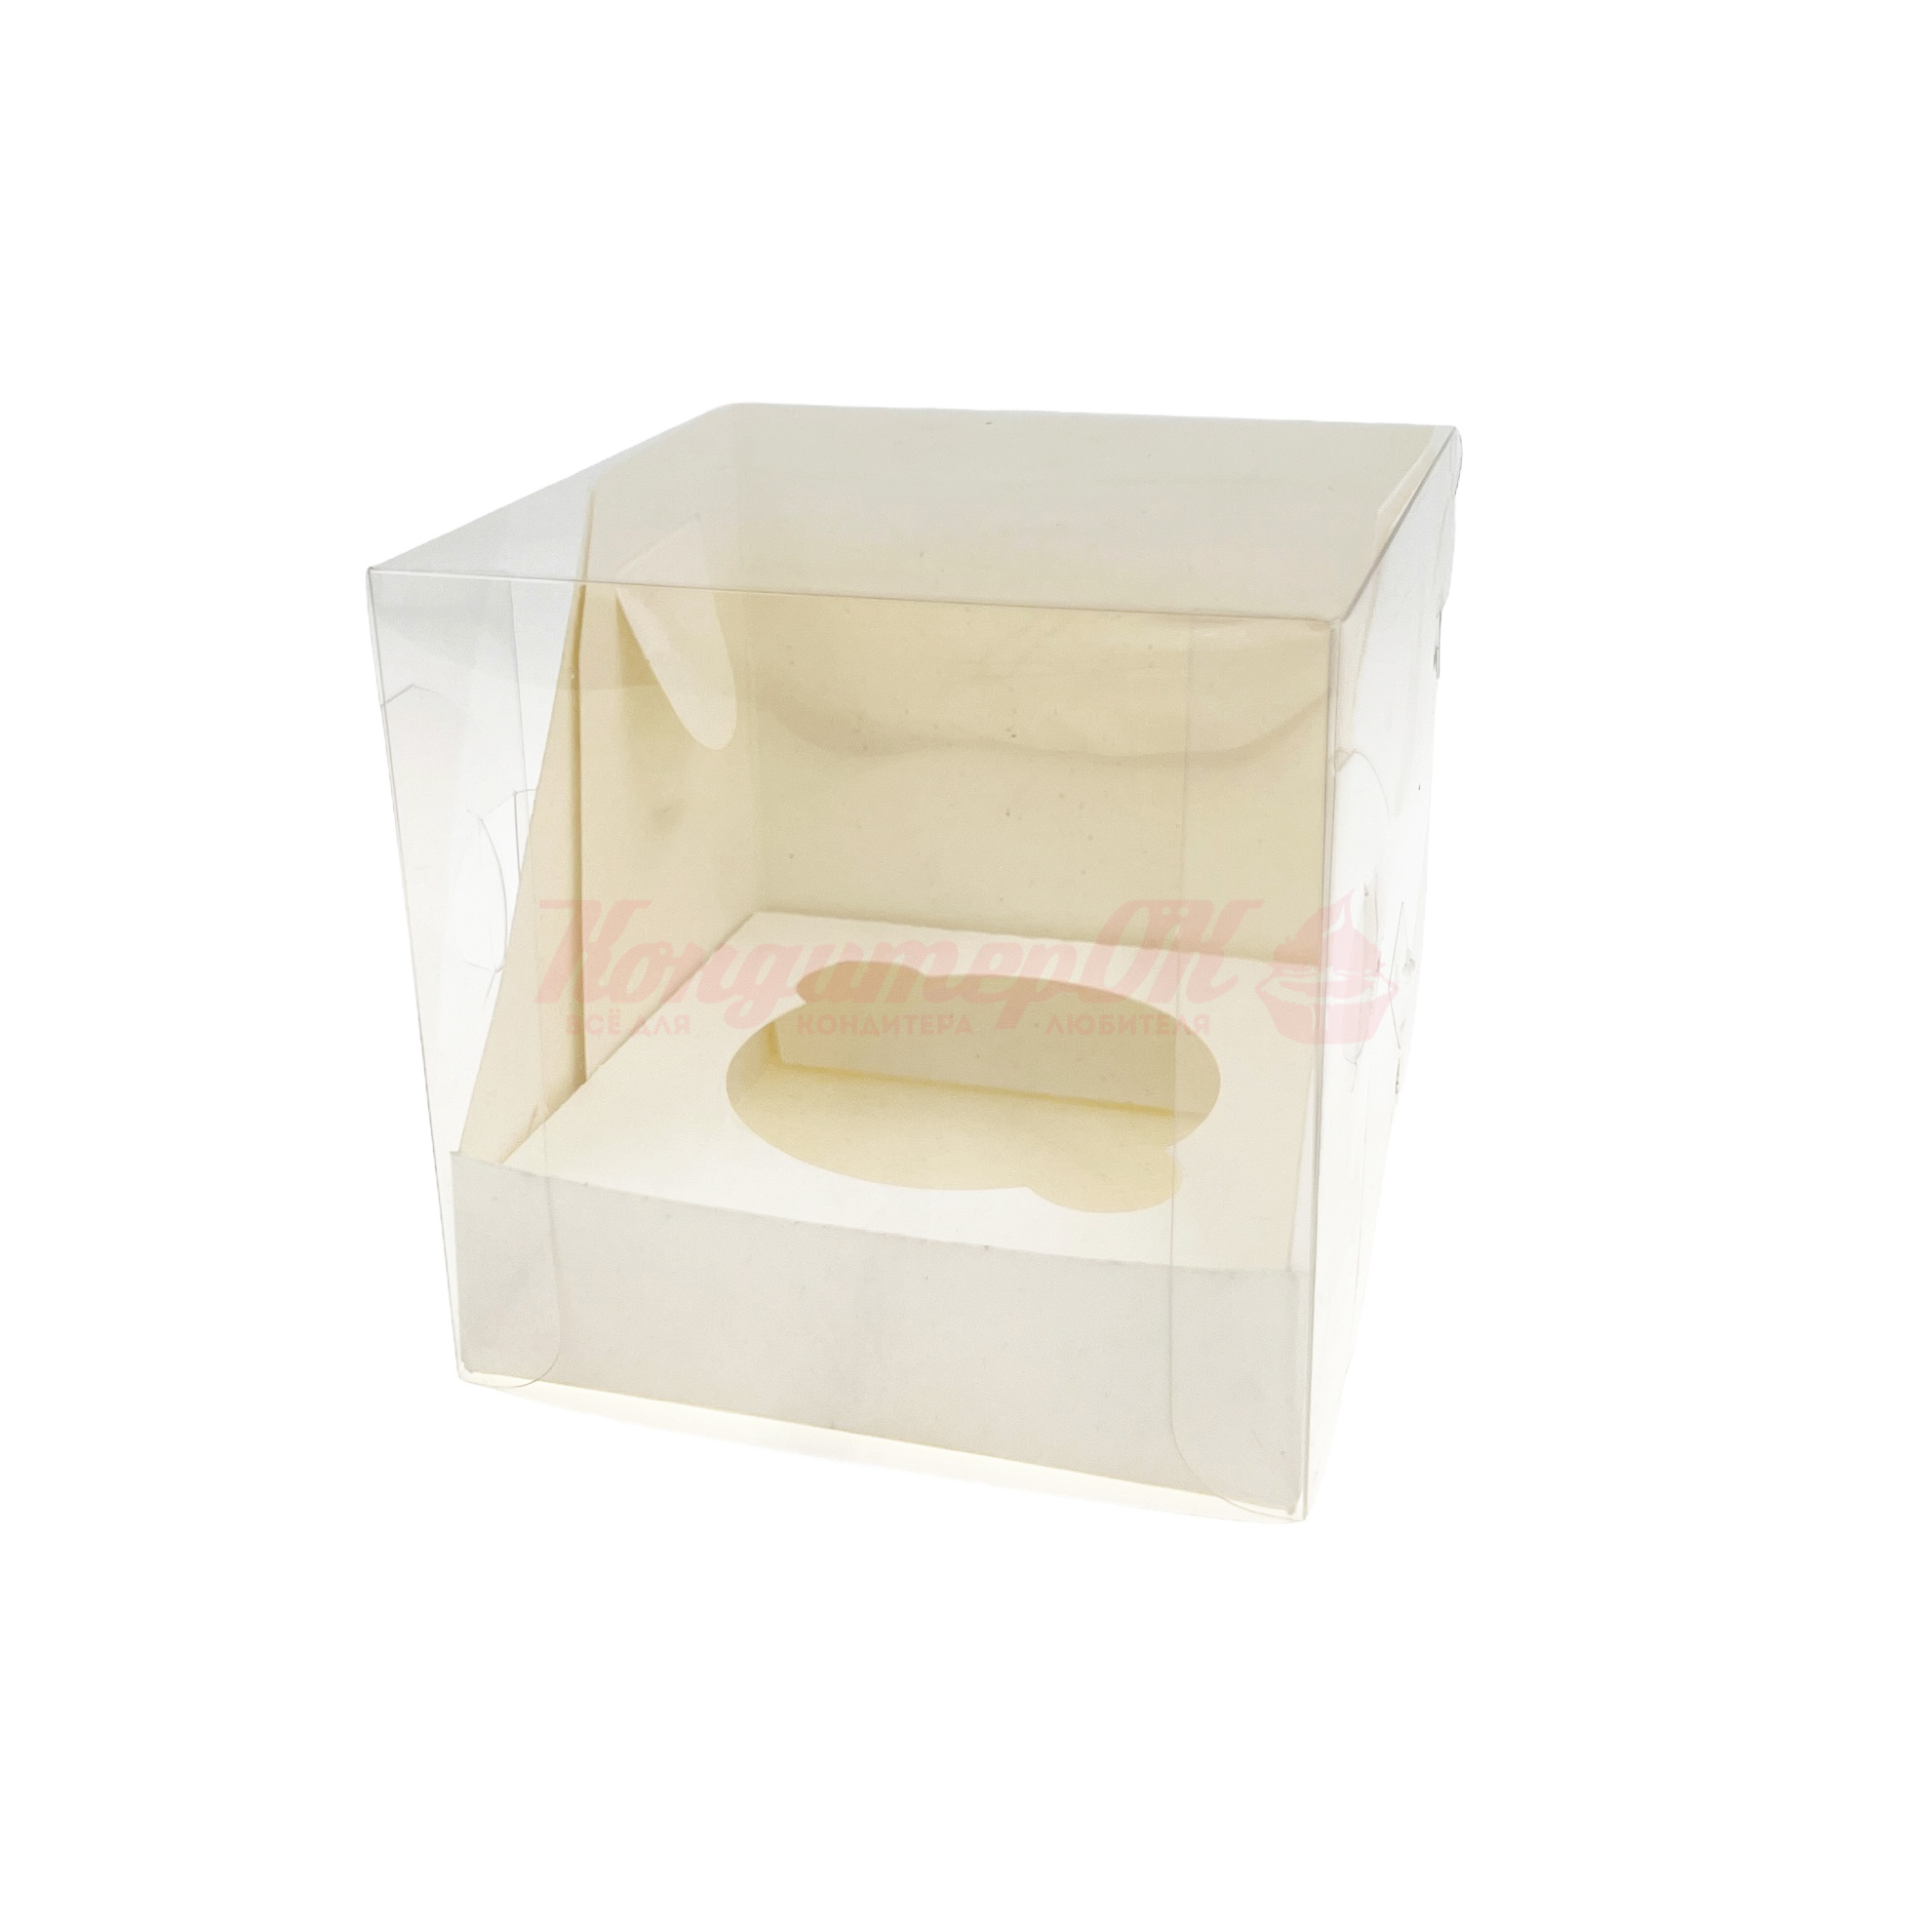 Коробка для 1 капкейка белая со скош. окном 100*100*100 мм